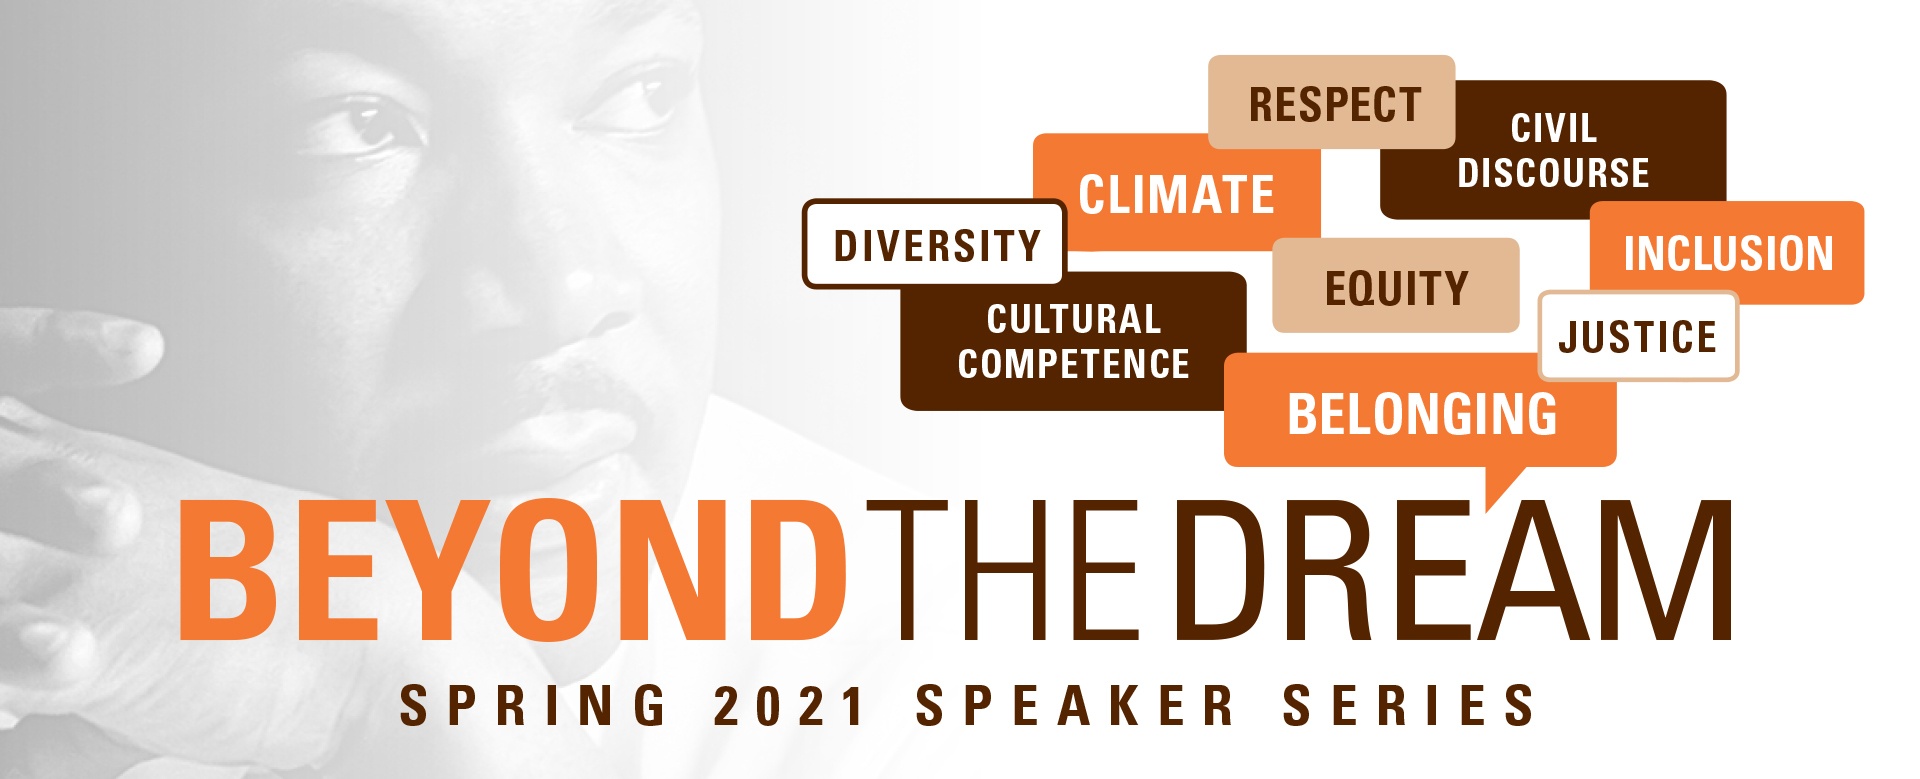 Beyond the Dream Spring 2021 Speaker Series